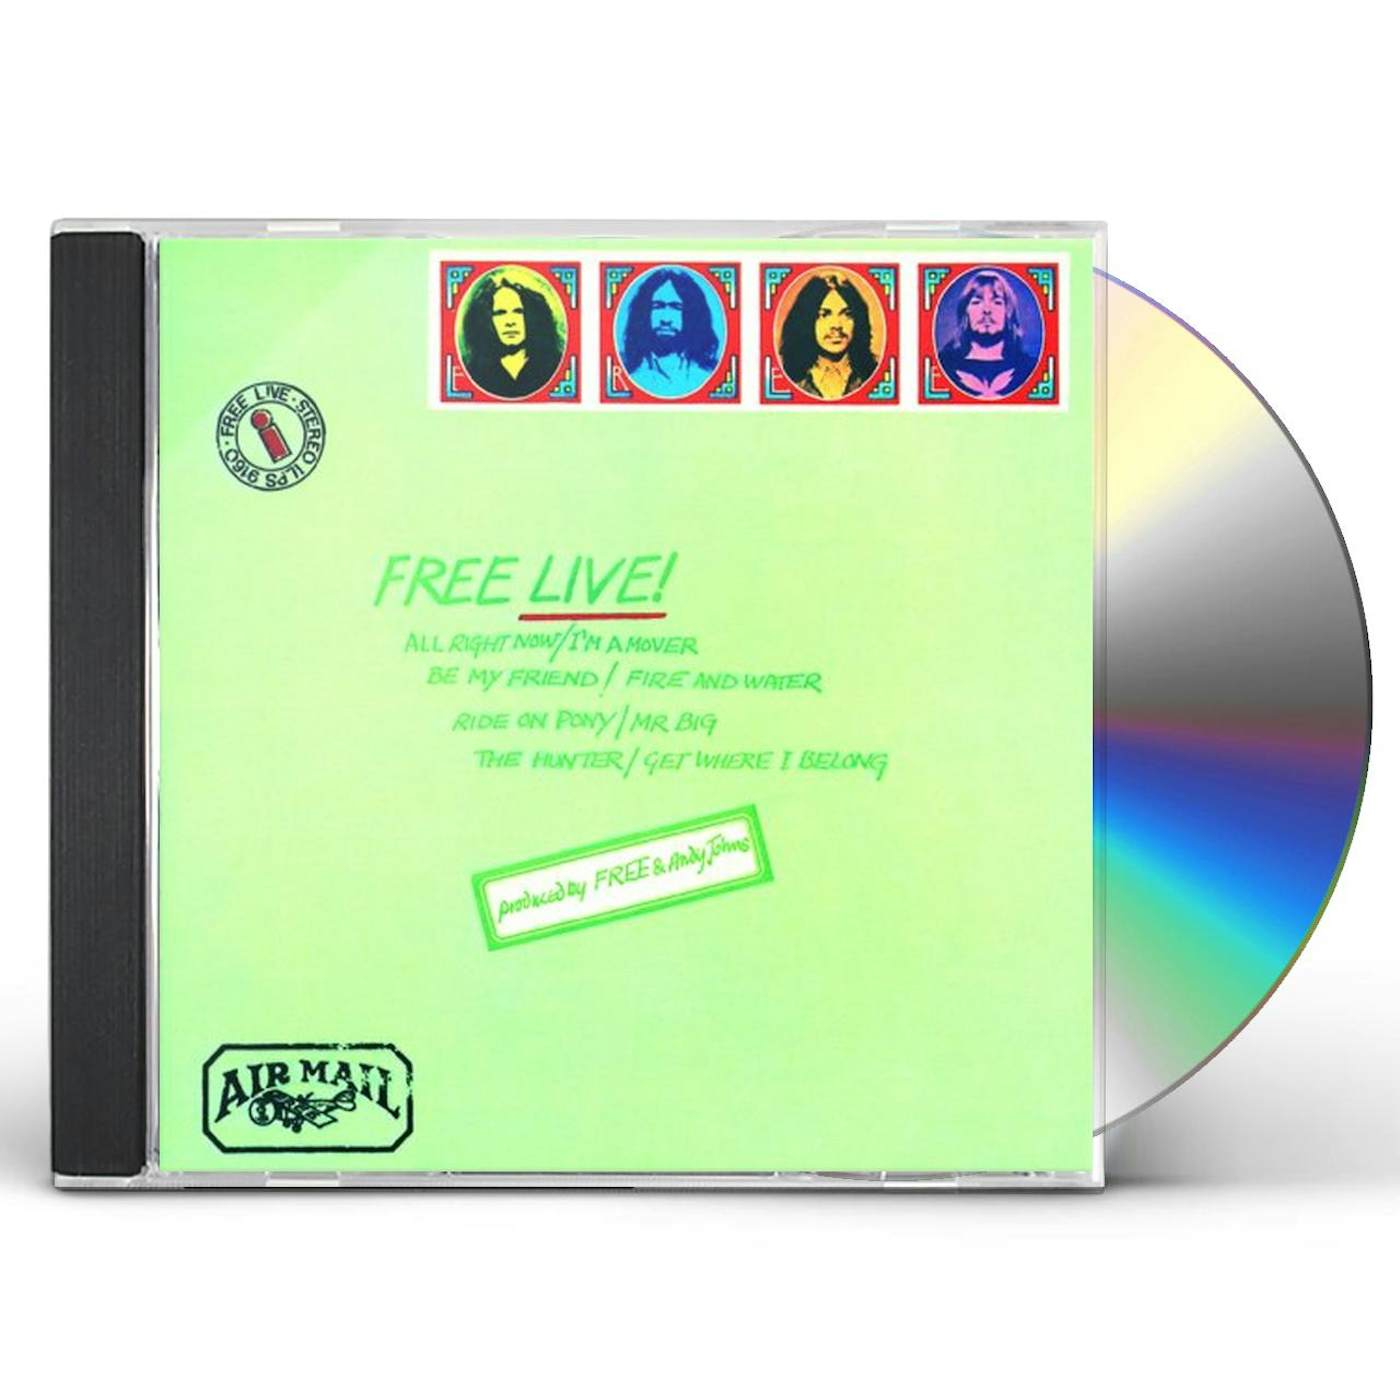 Free LIVE CD